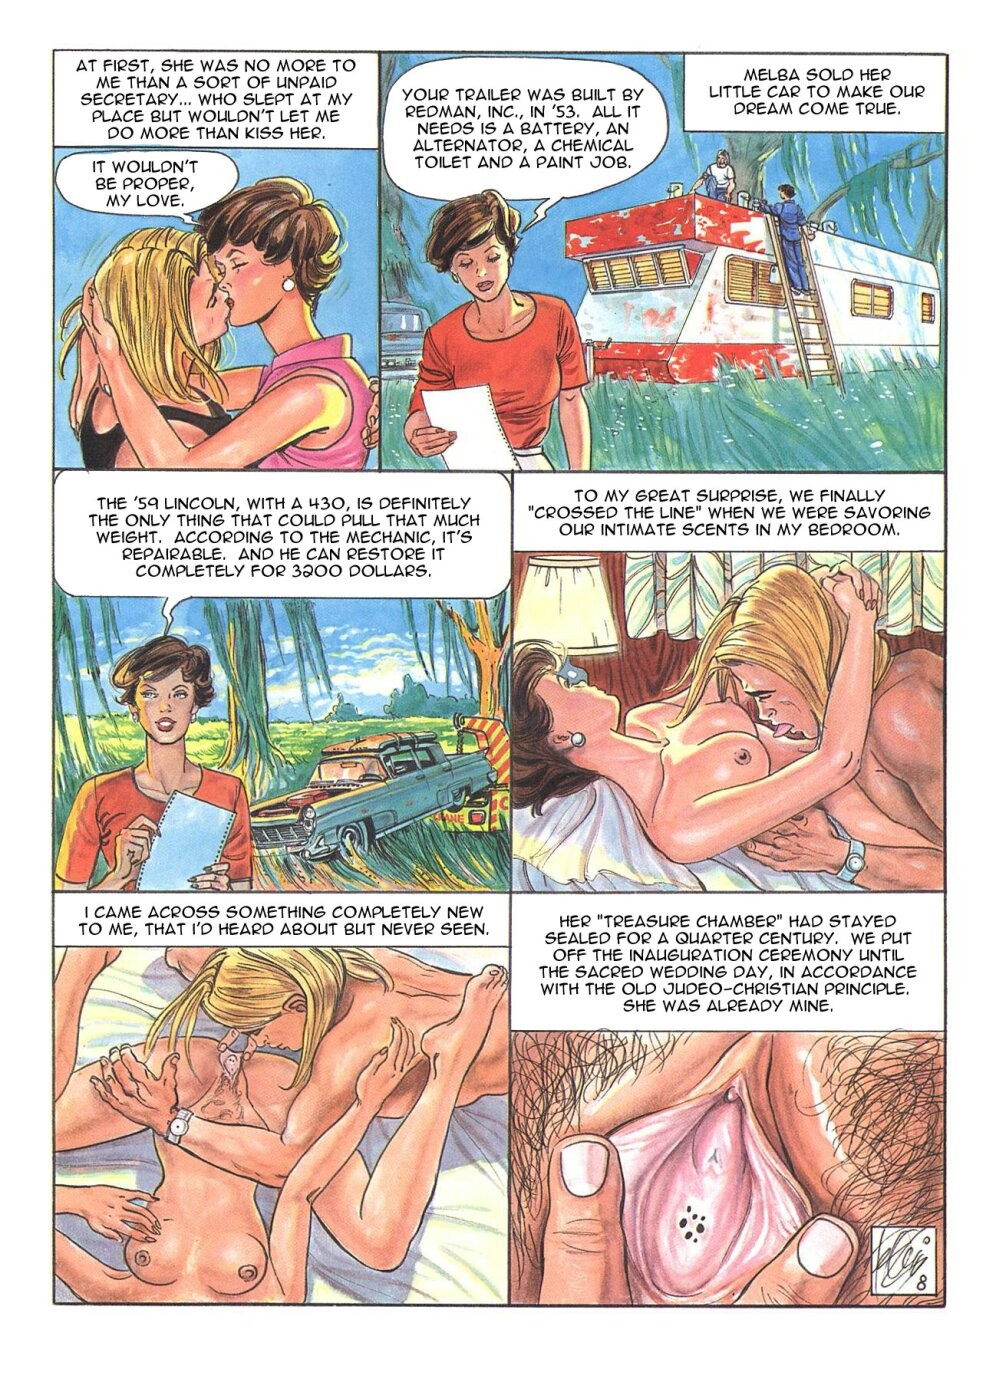 extreme hard deep wet sexual fetishes bizarre comics #69667806